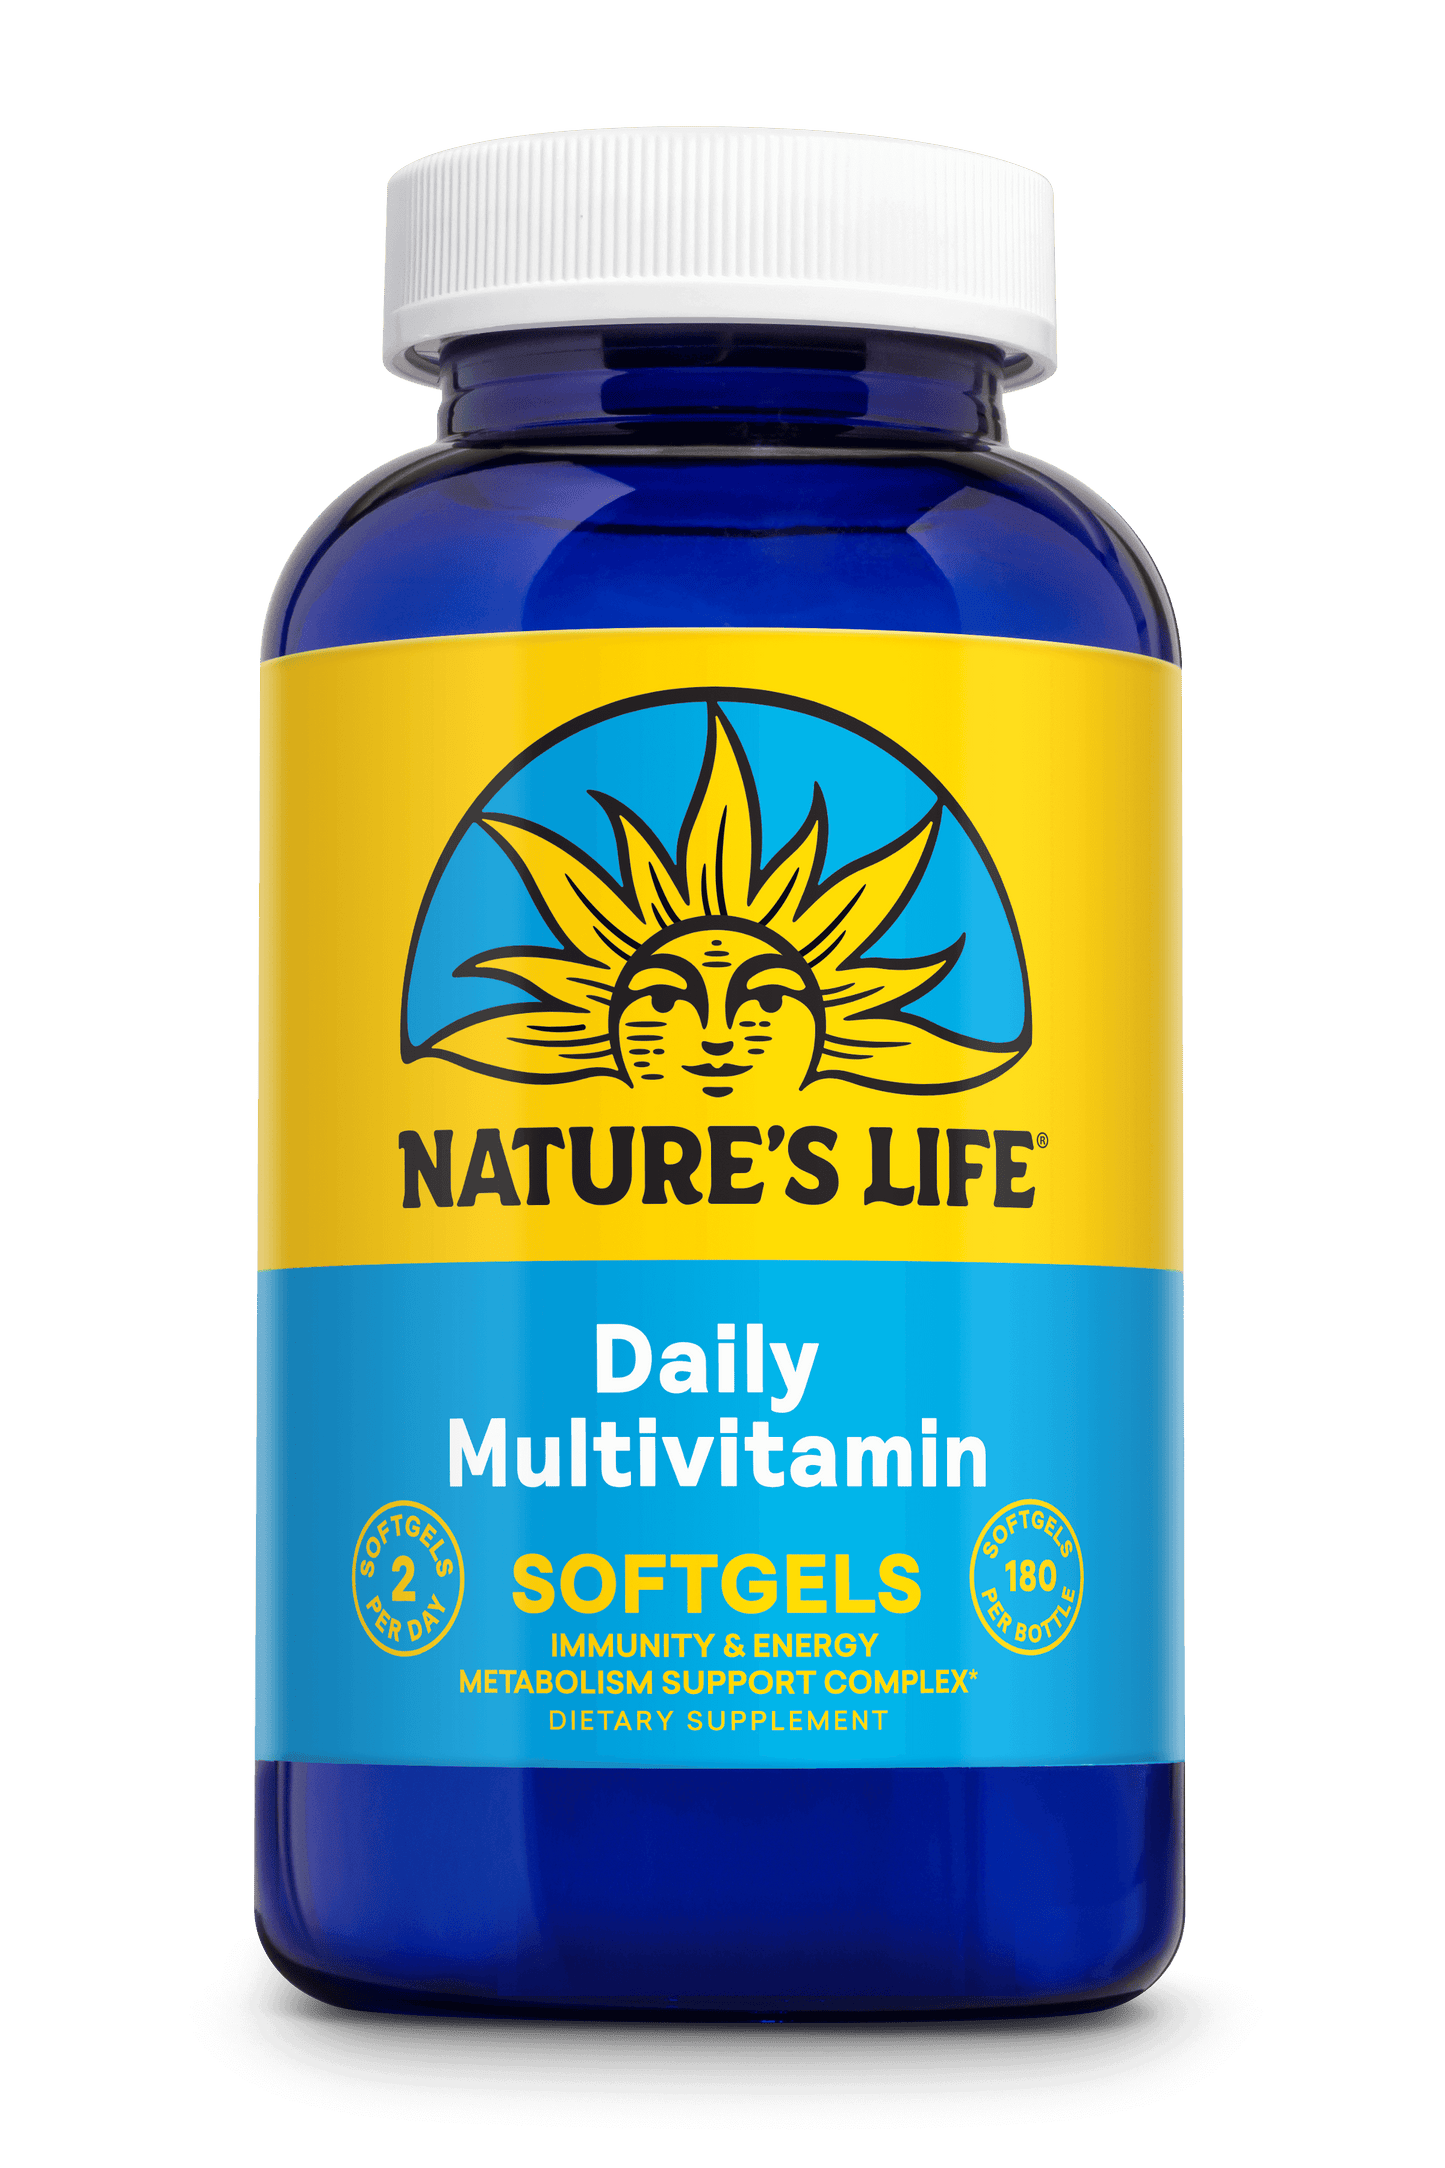 Daily Multivitamin Softgels